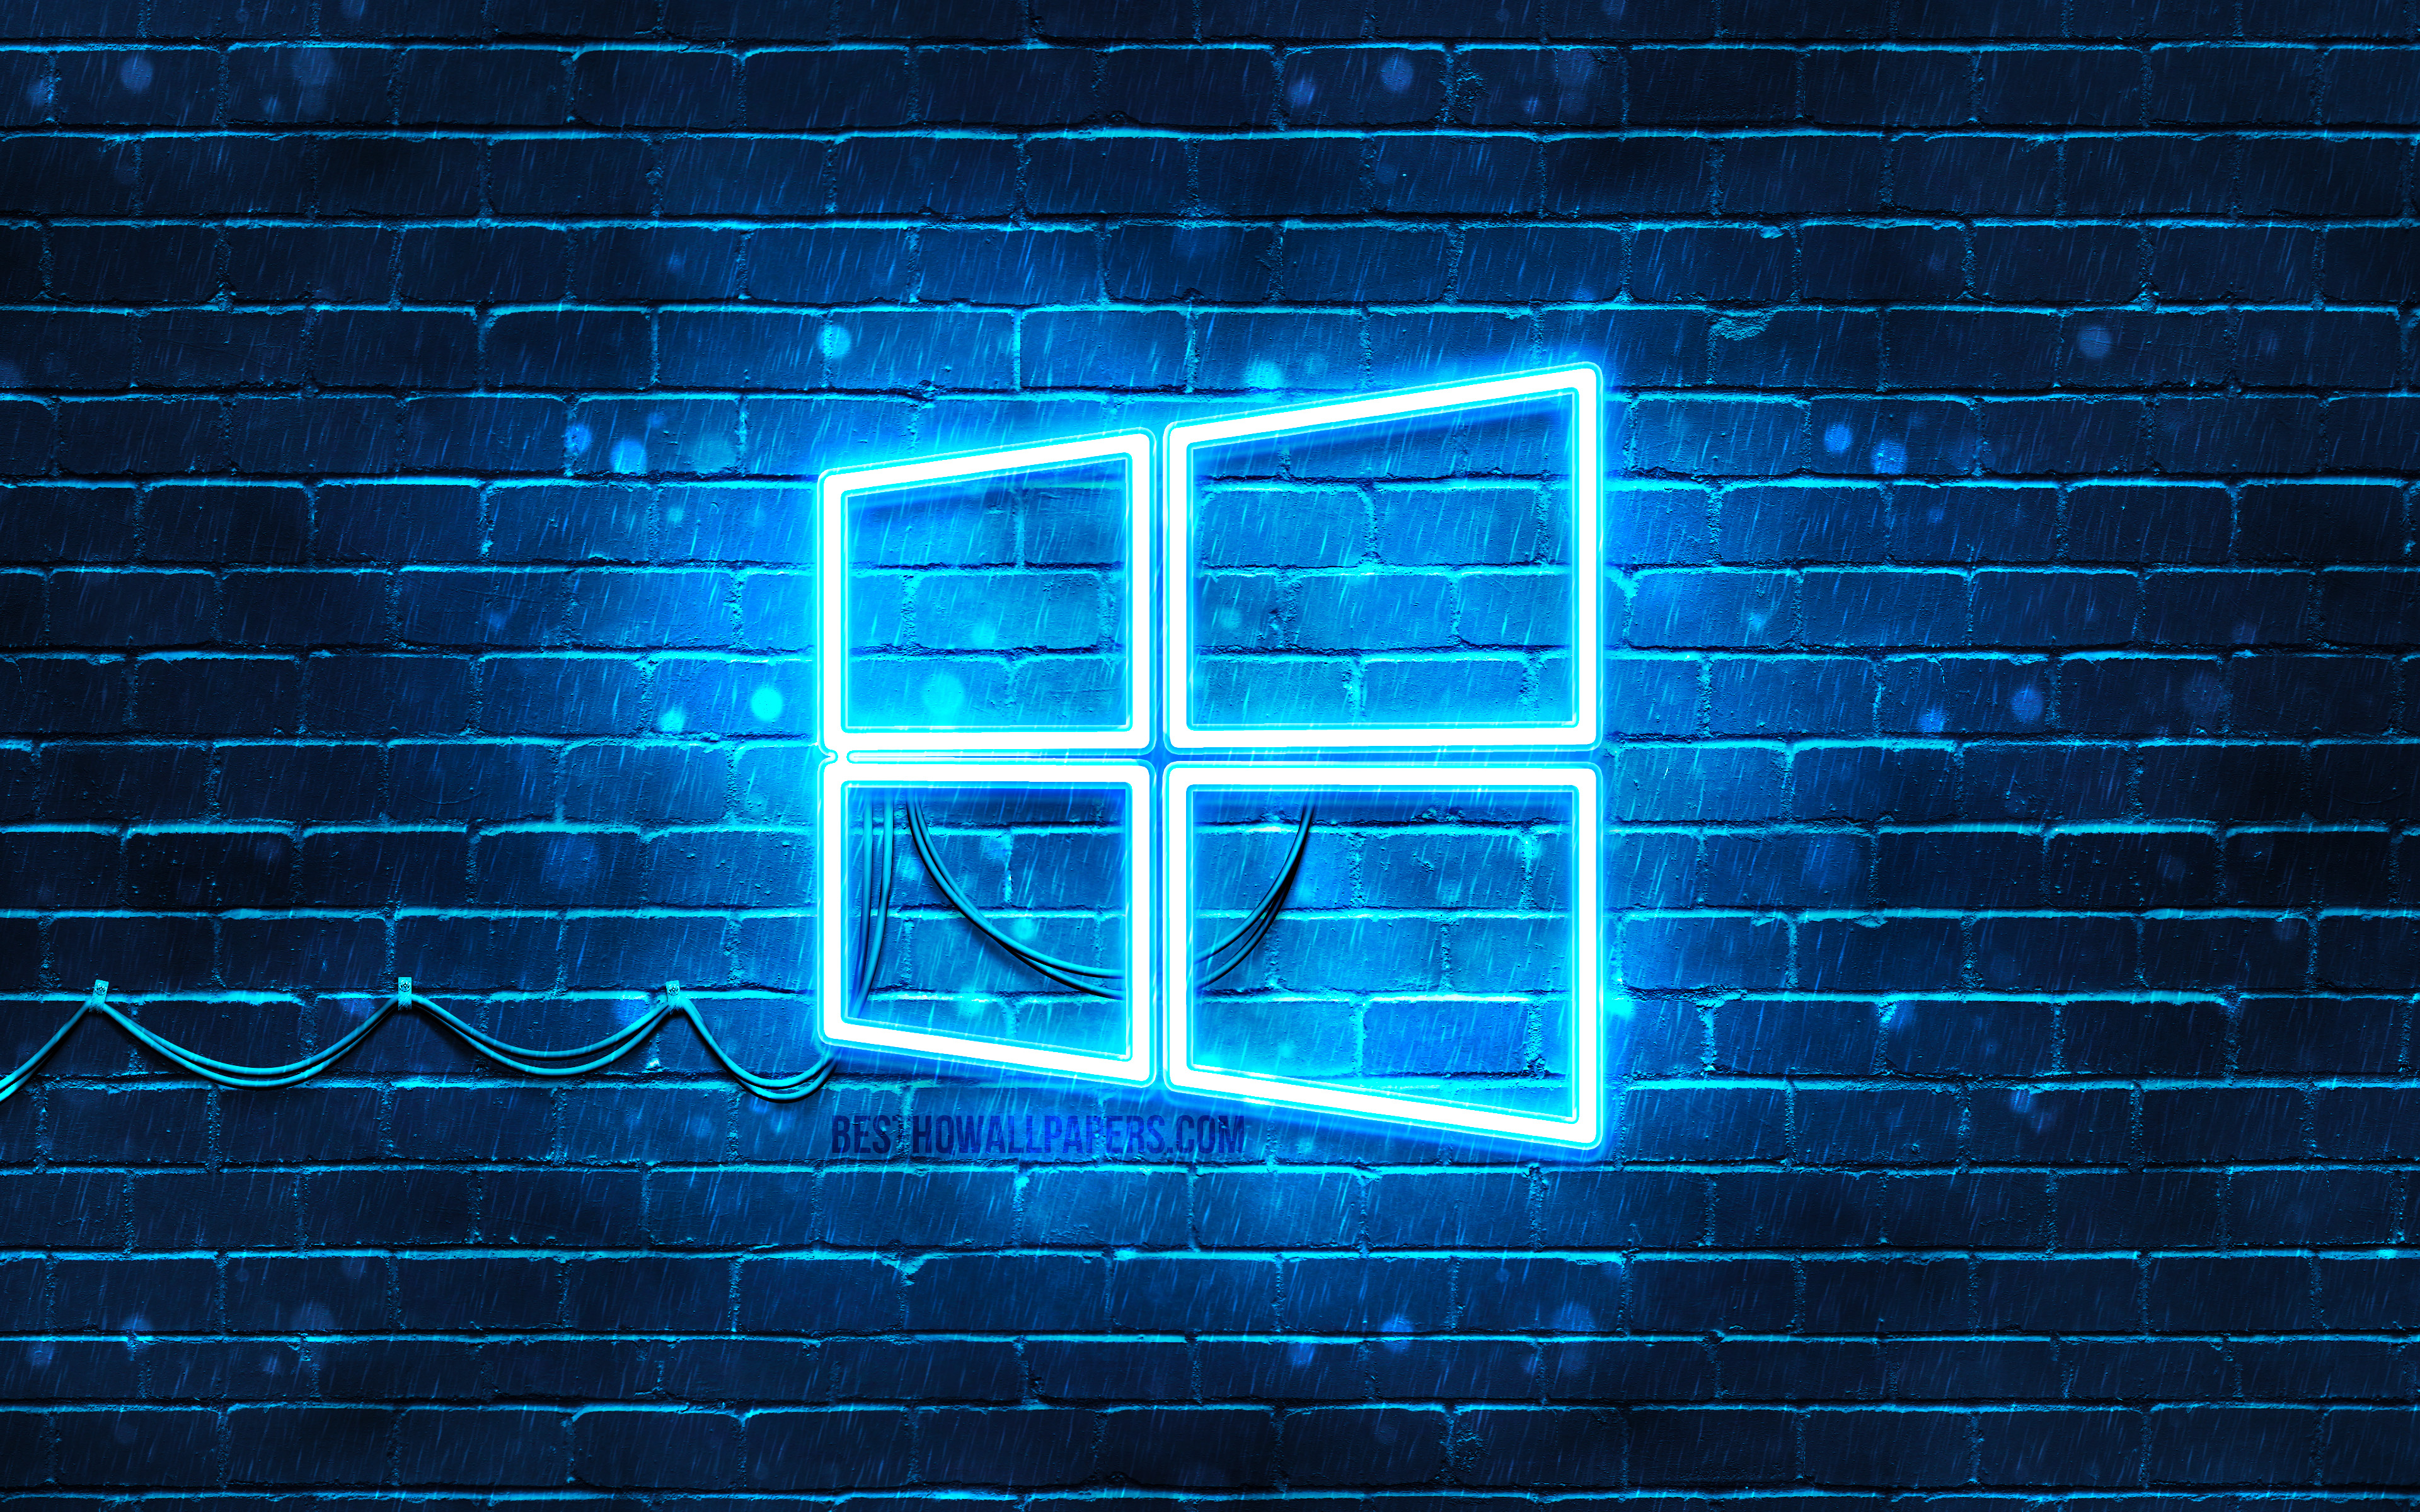 Windows 10 Glowing Blue 4k Ultra Hd Fond Decran And Arriere Plan Images